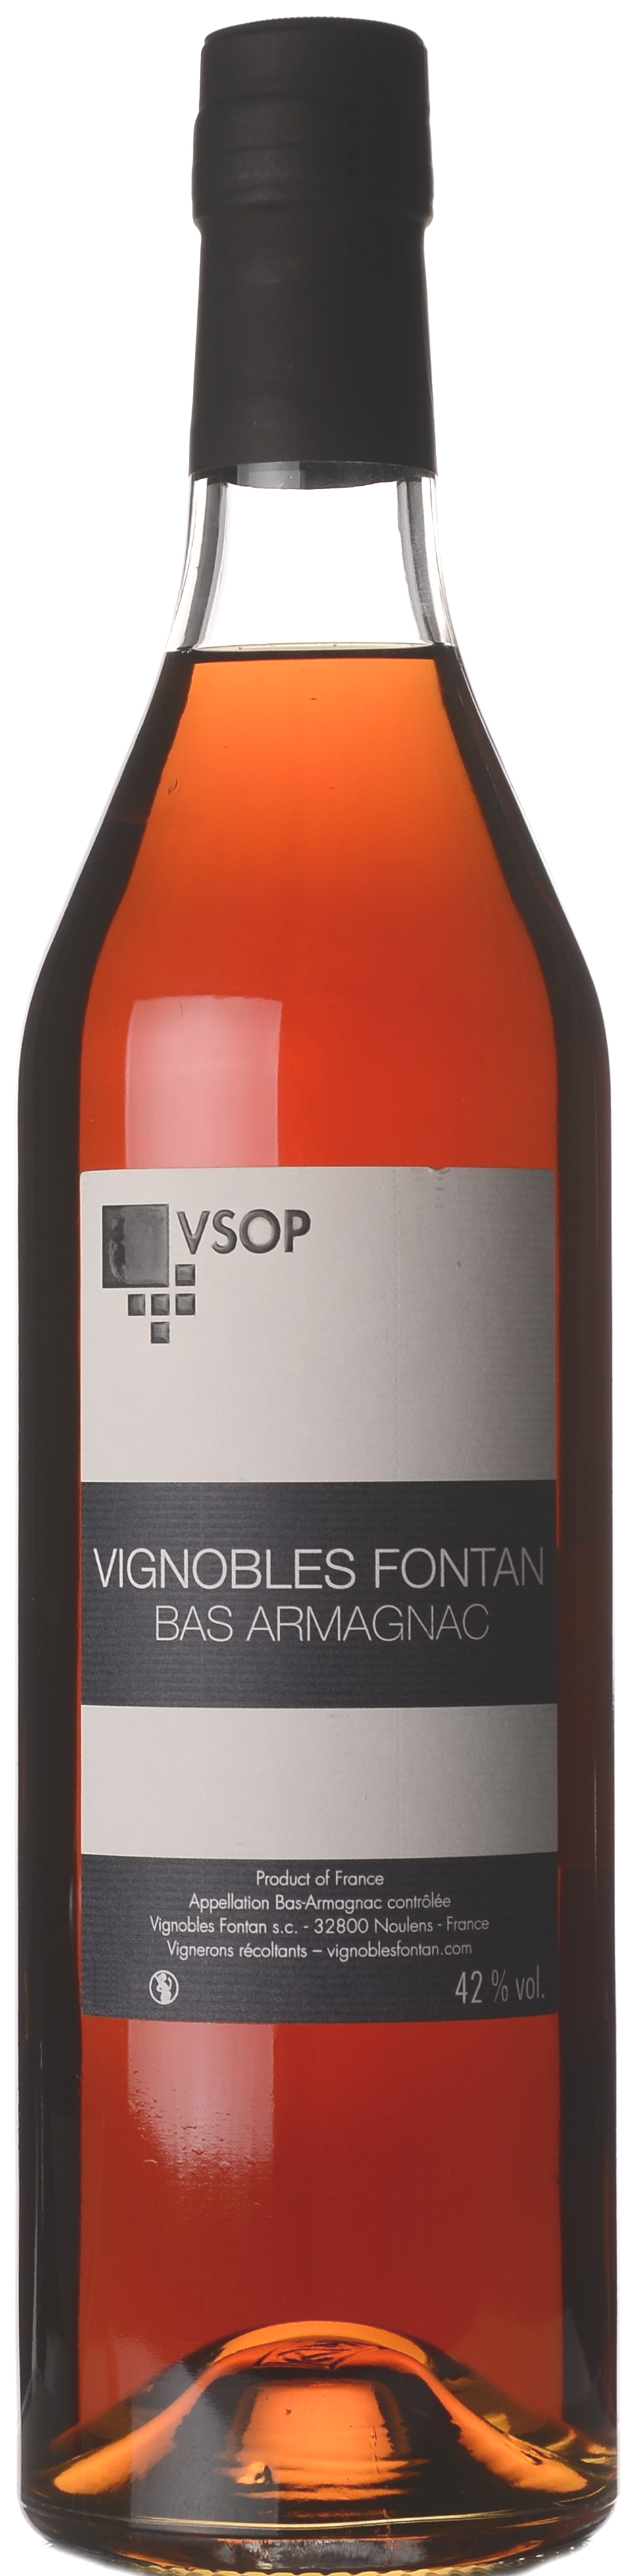 Vignobles Fontan - Armagnac XO